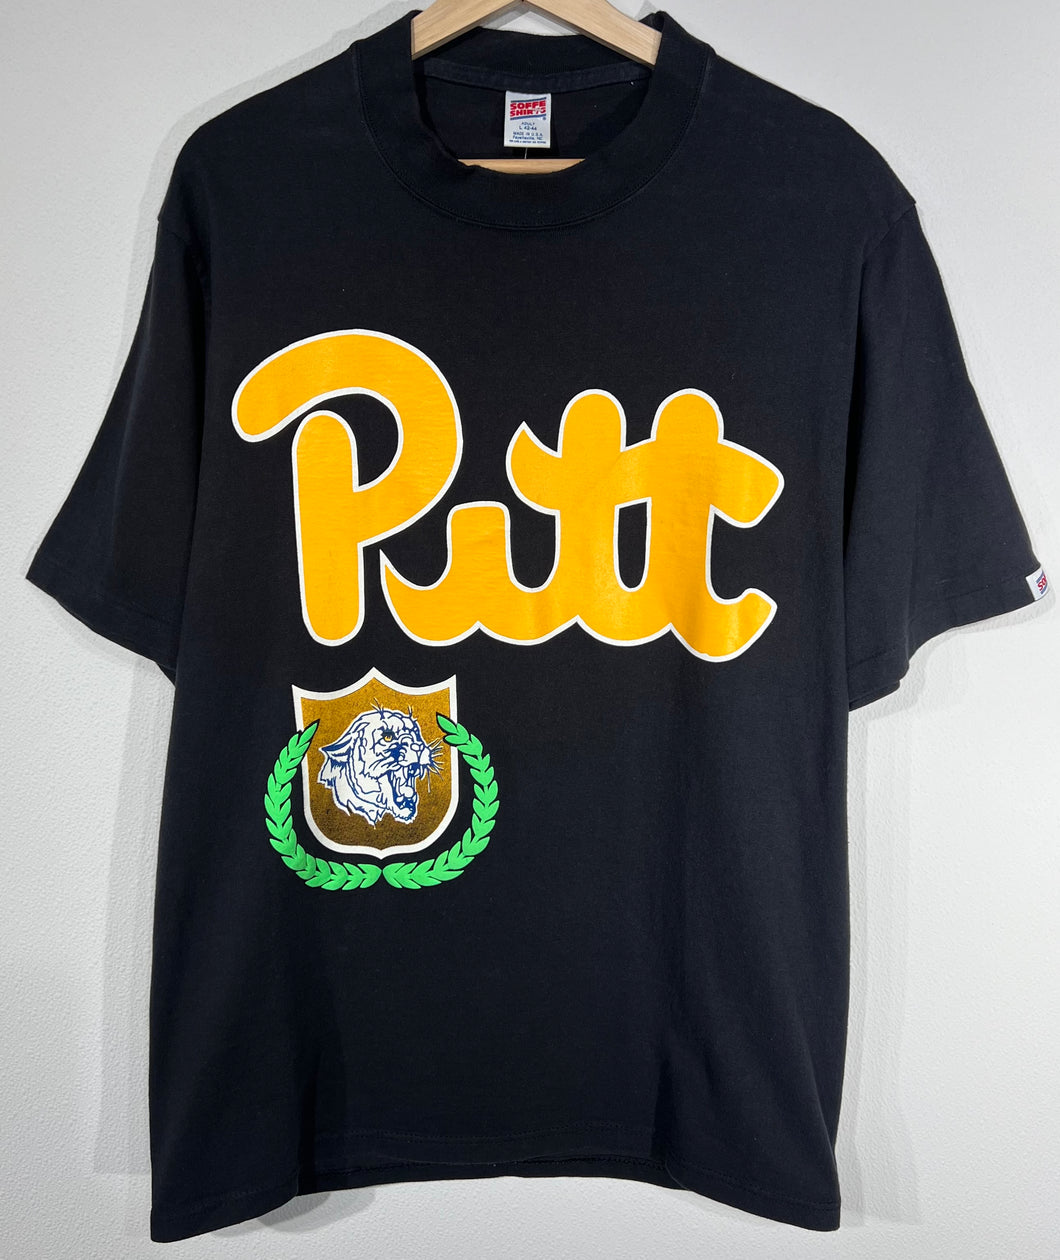 Vintage Pitt Panthers Tshirt sz Large